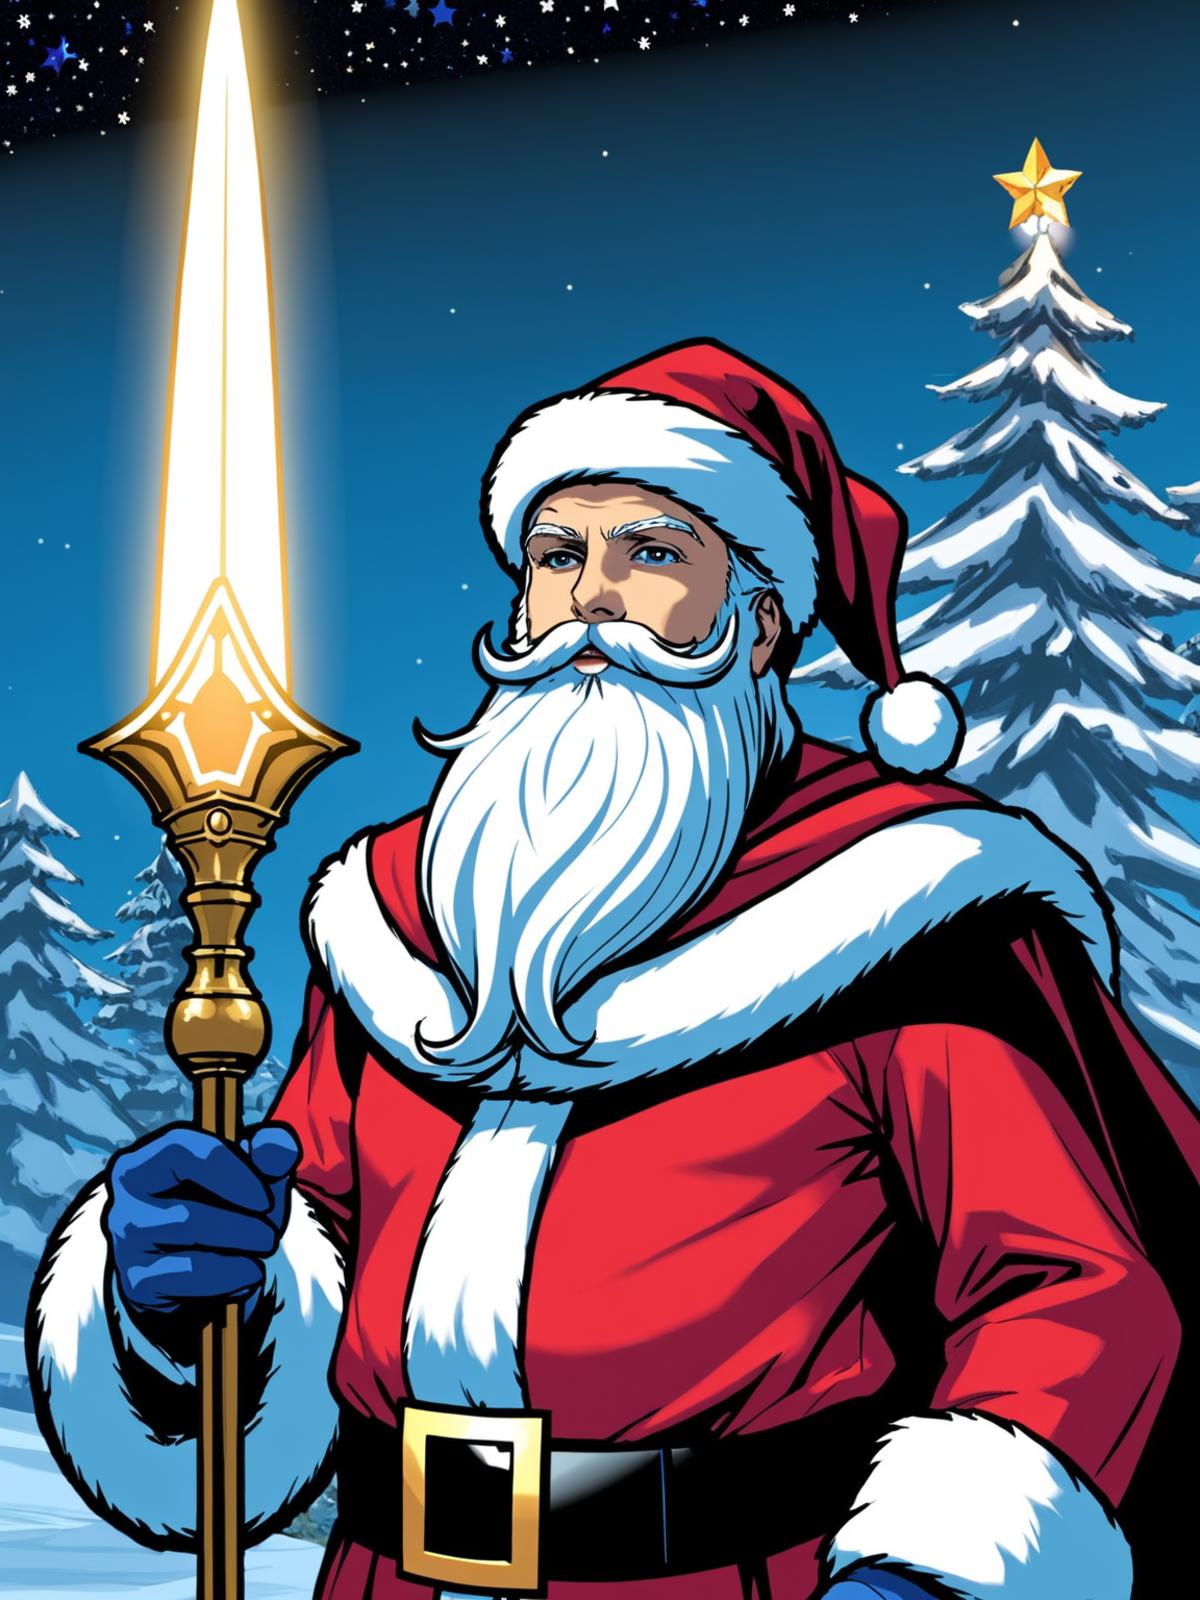 A cartoon Santa Claus holding a lighted staff.